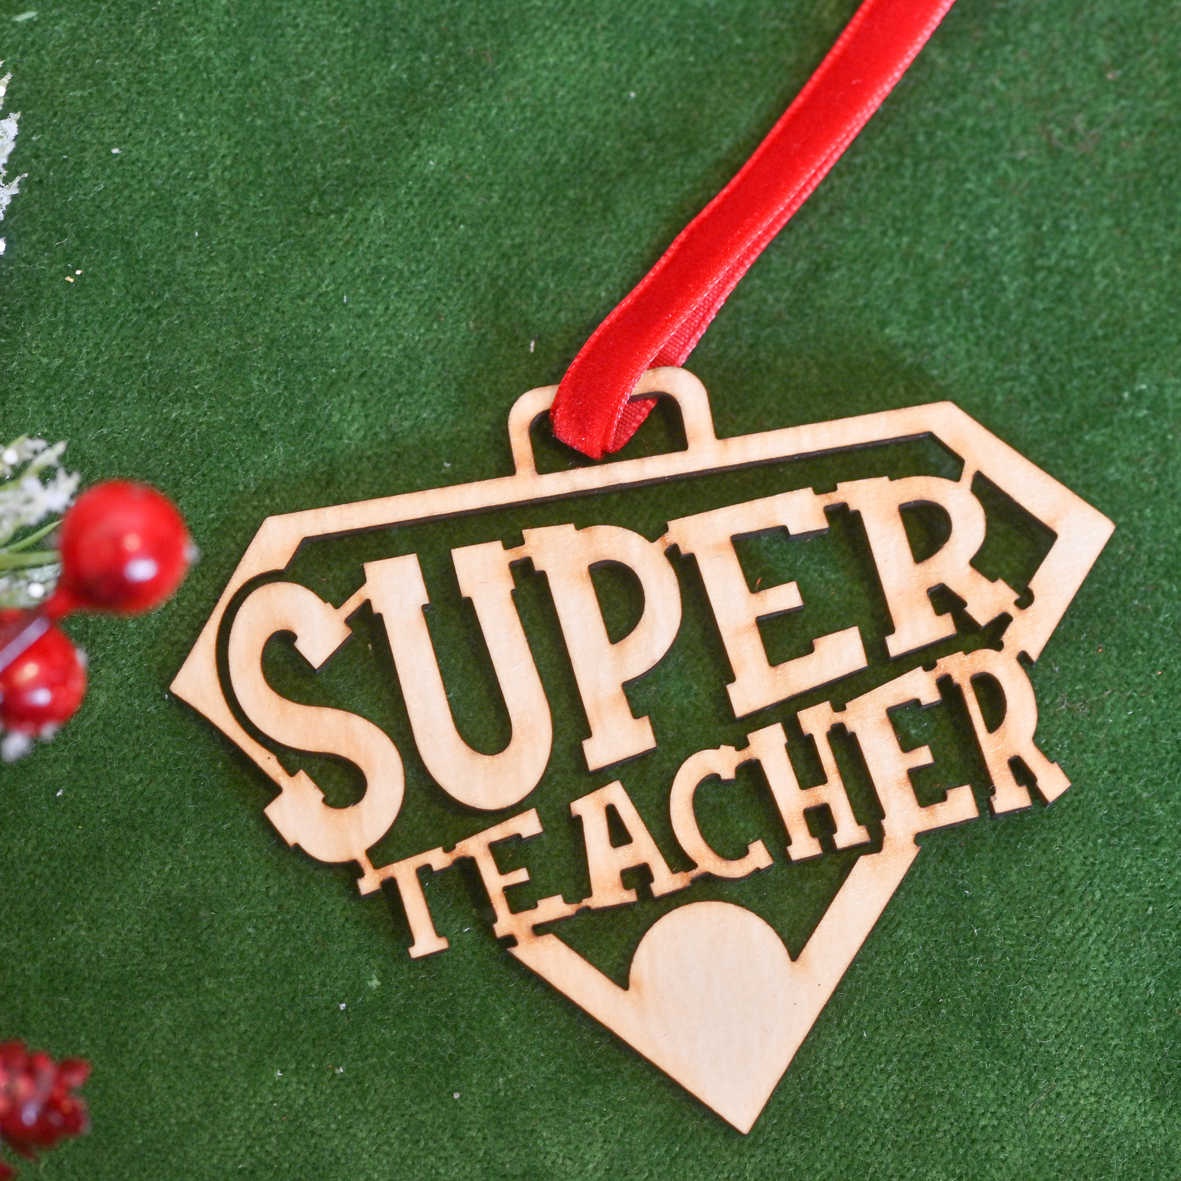 Super Teacher - Ξύλινο Στολίδι